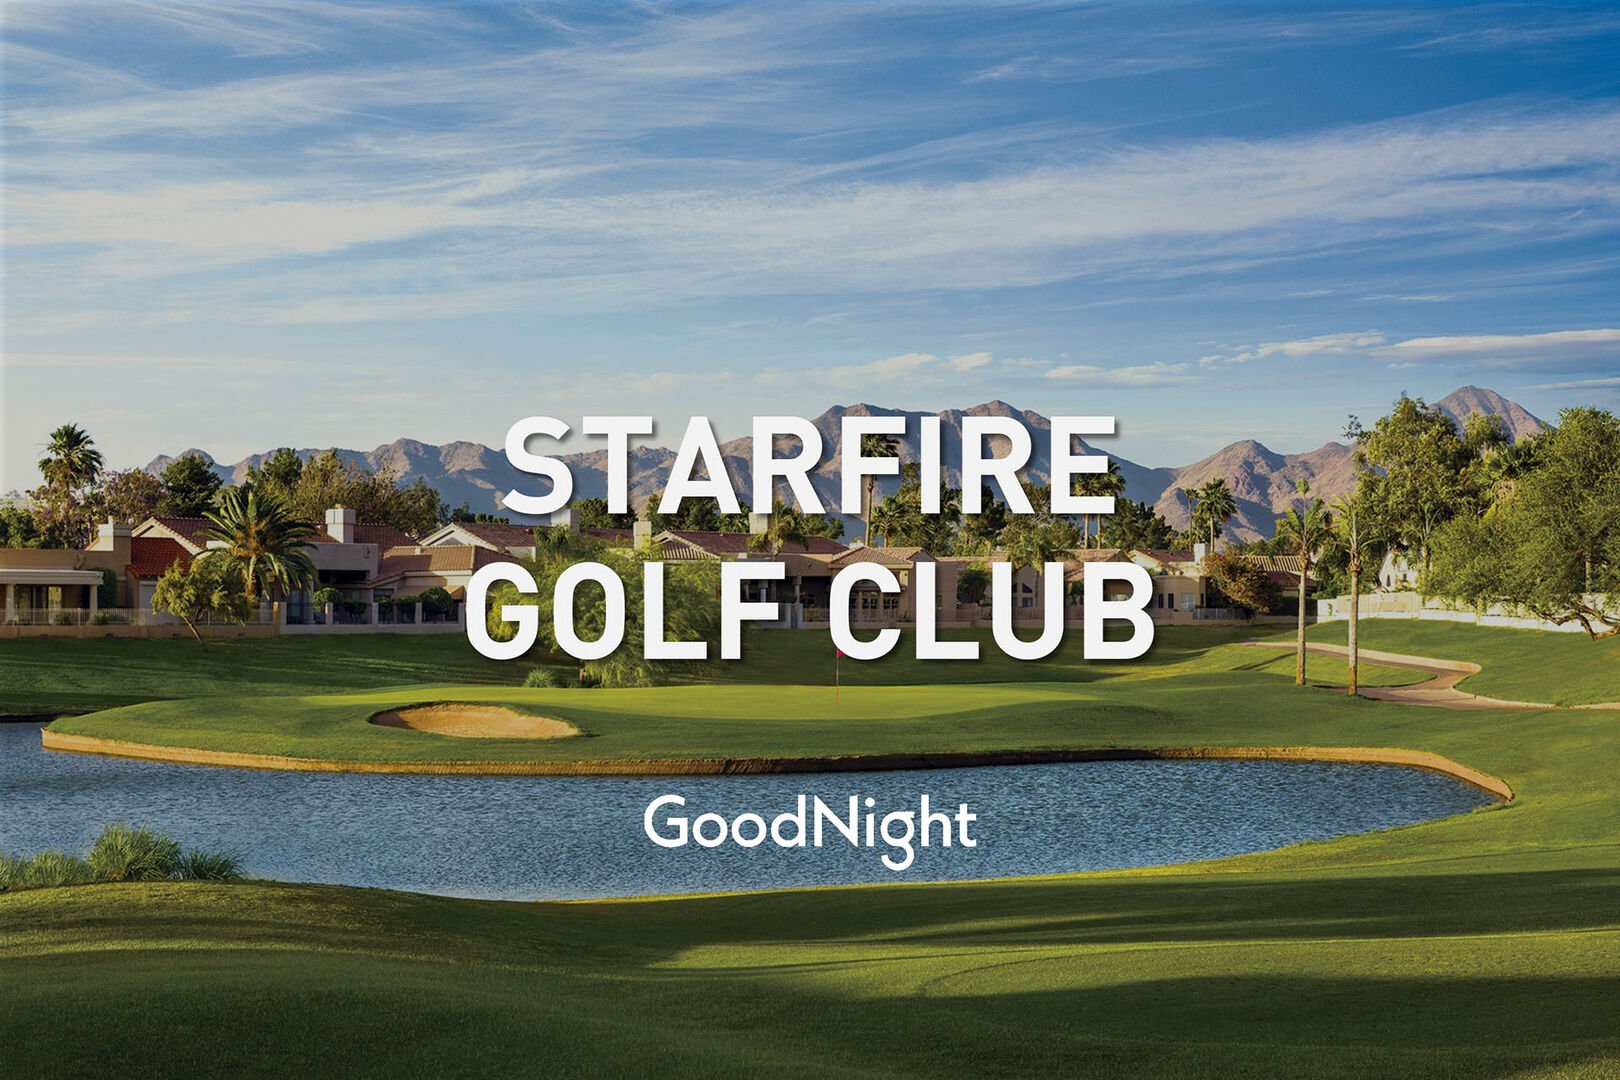 15 minutes to Starfire Golf Club